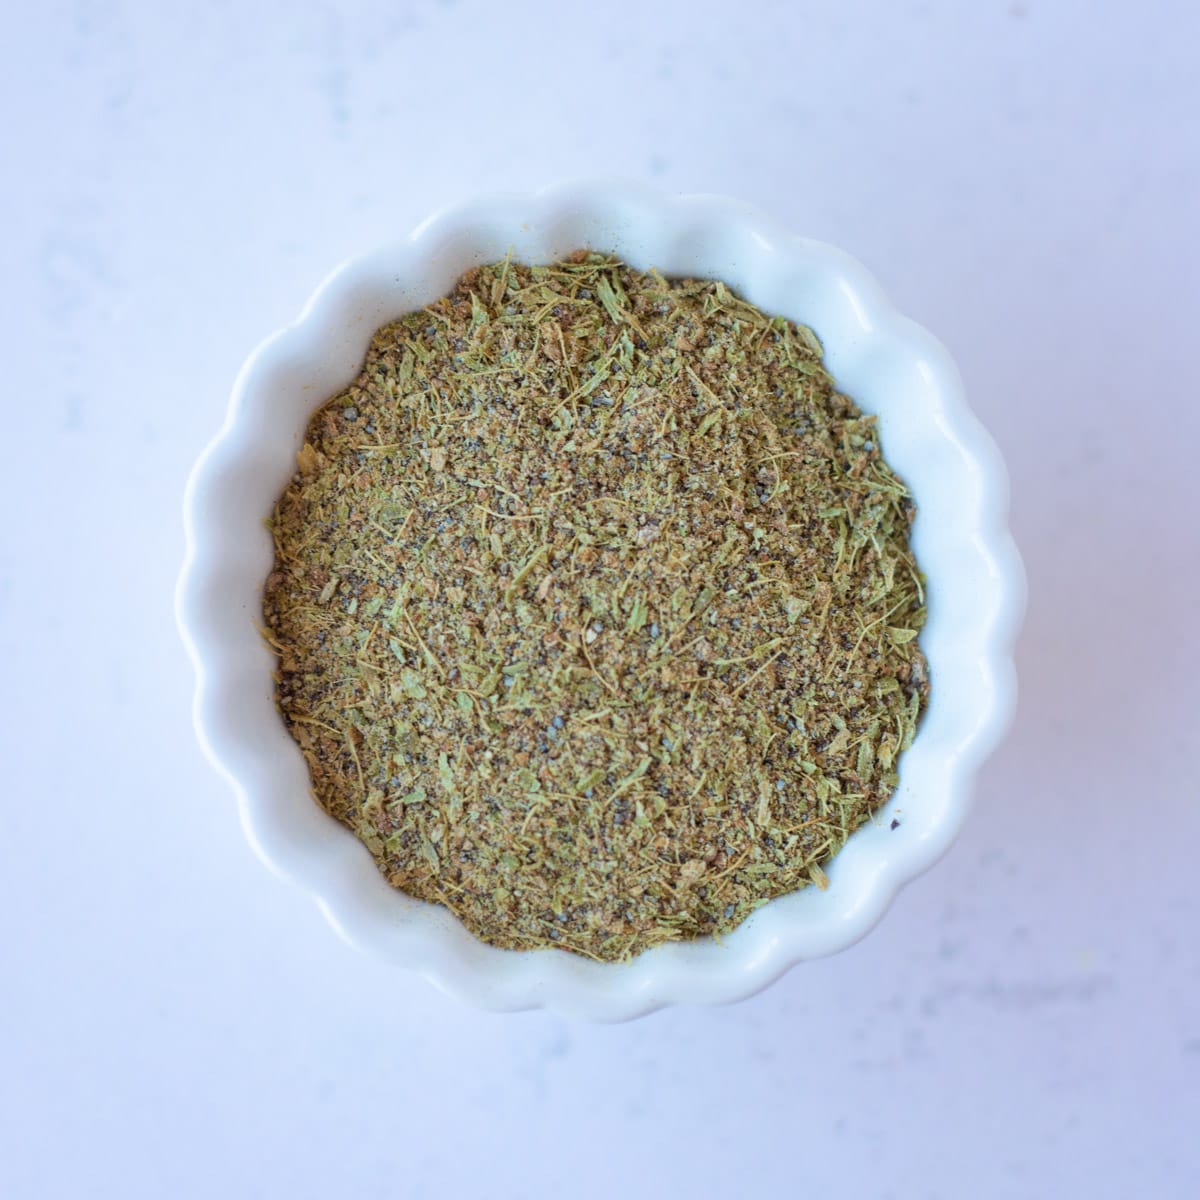 Ground Cardamom powder in a small white bowl.